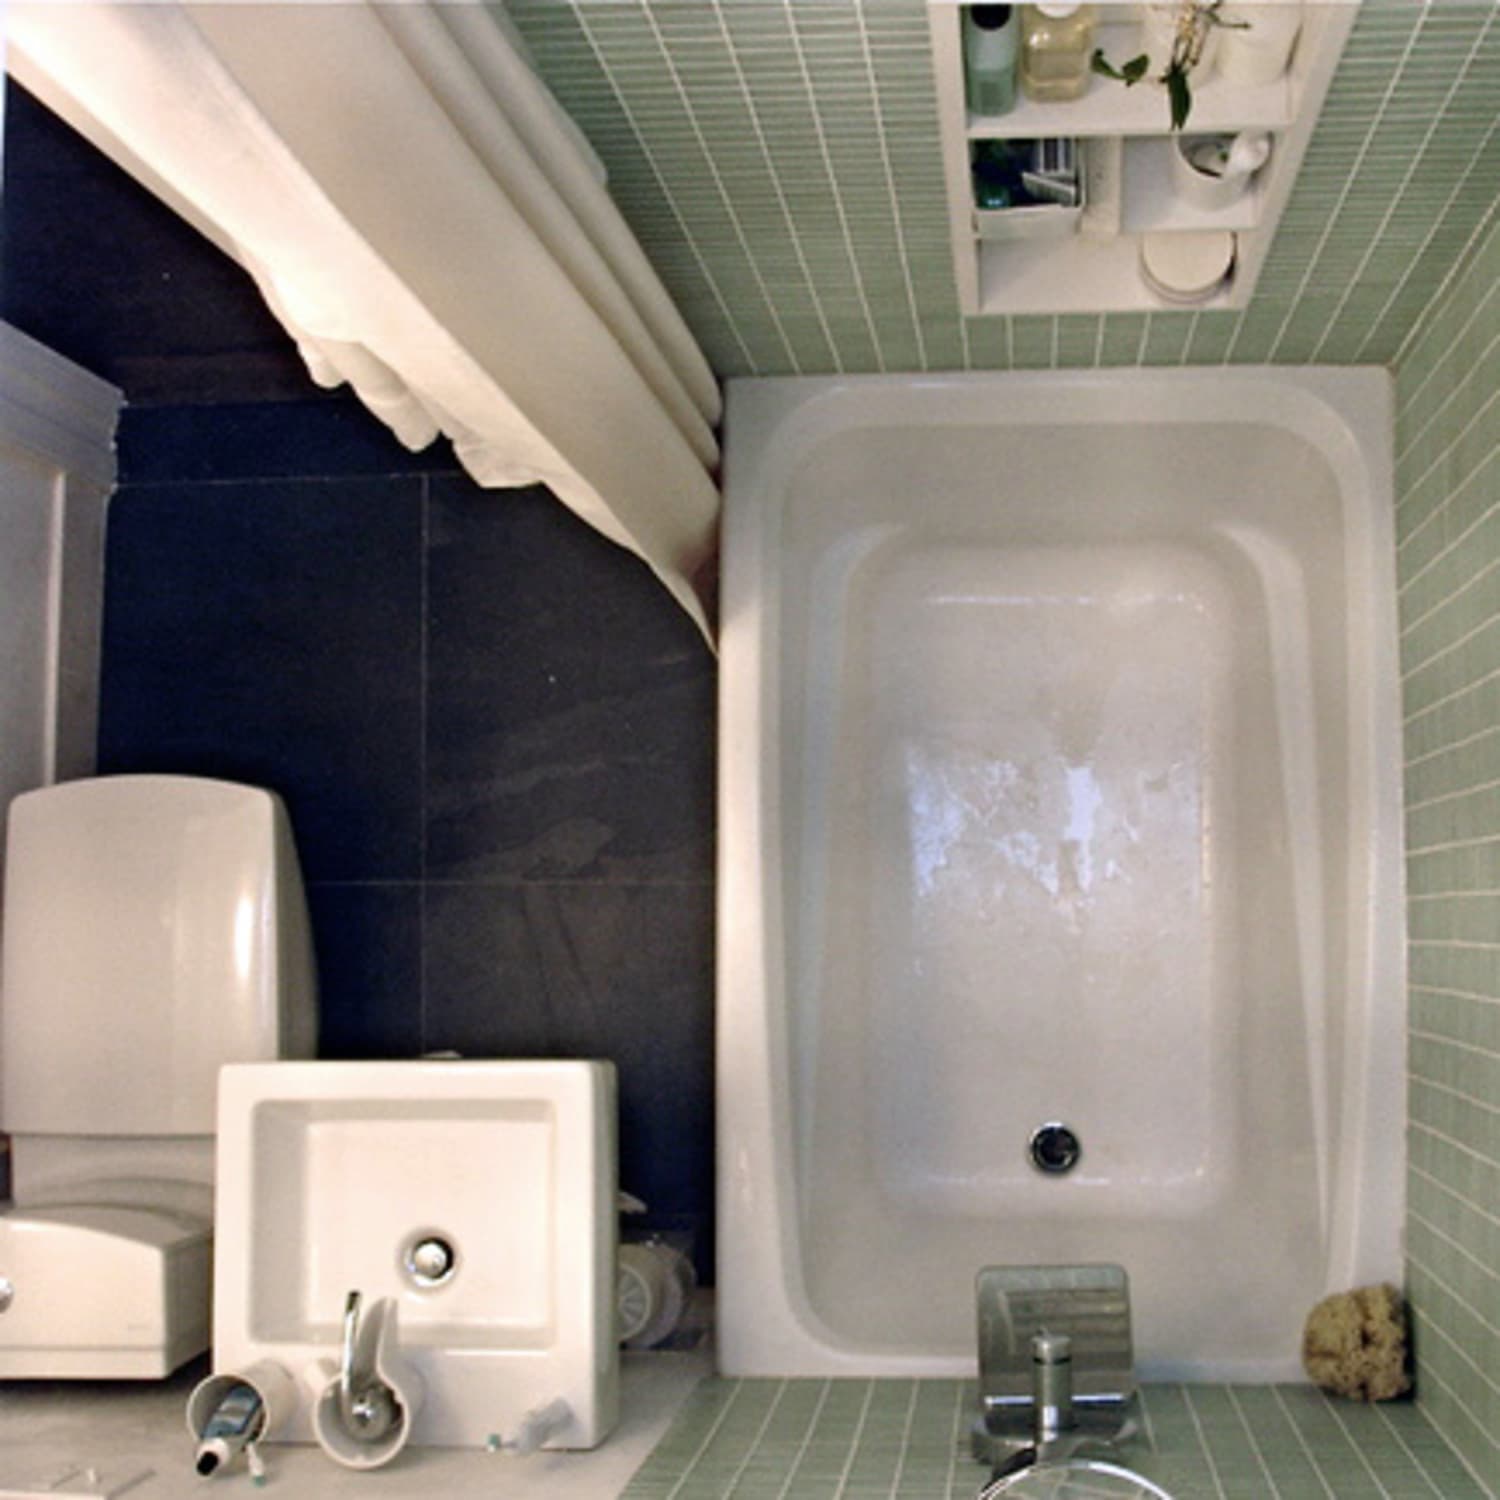 Small bathroom reno tips, The Irrigator